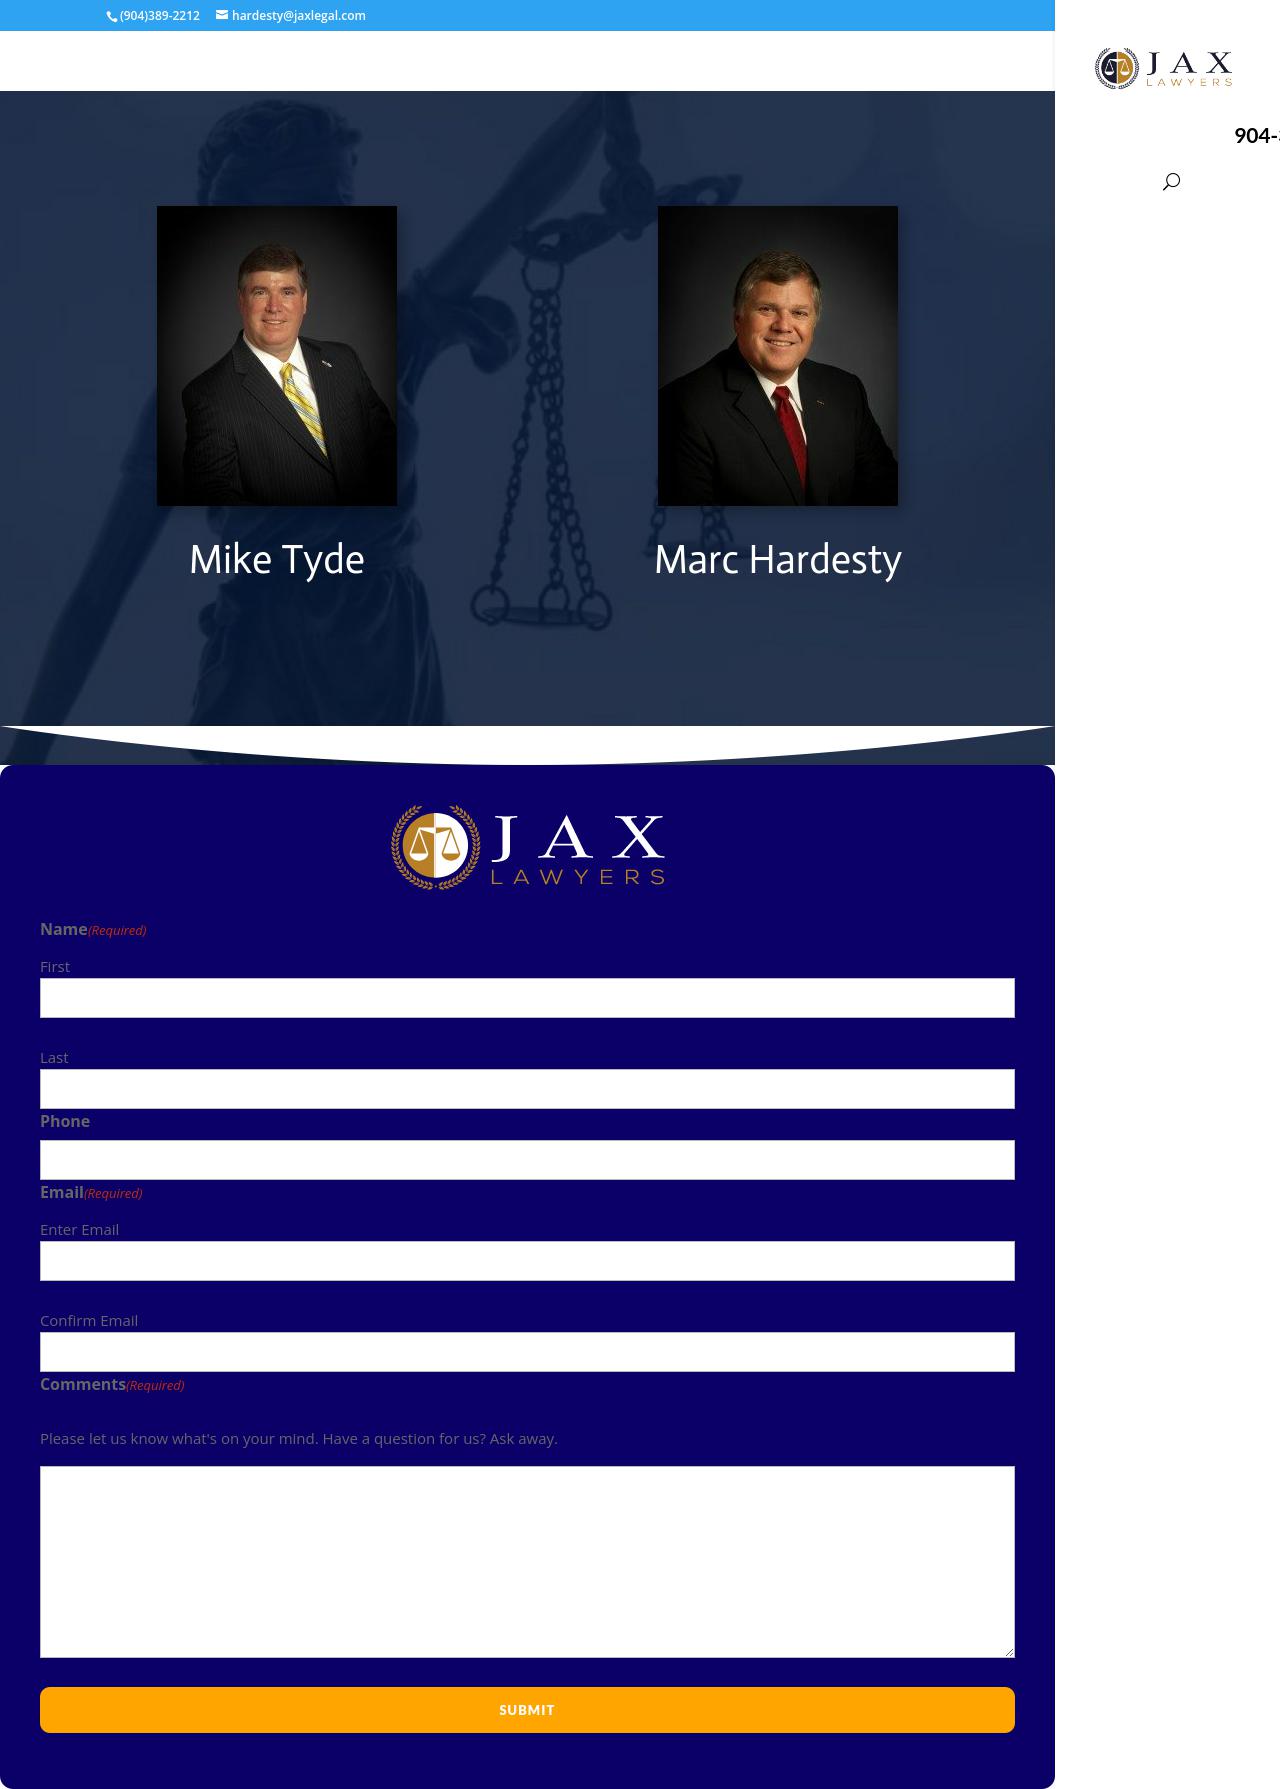 Jax Legal - Jacksonville FL Lawyers